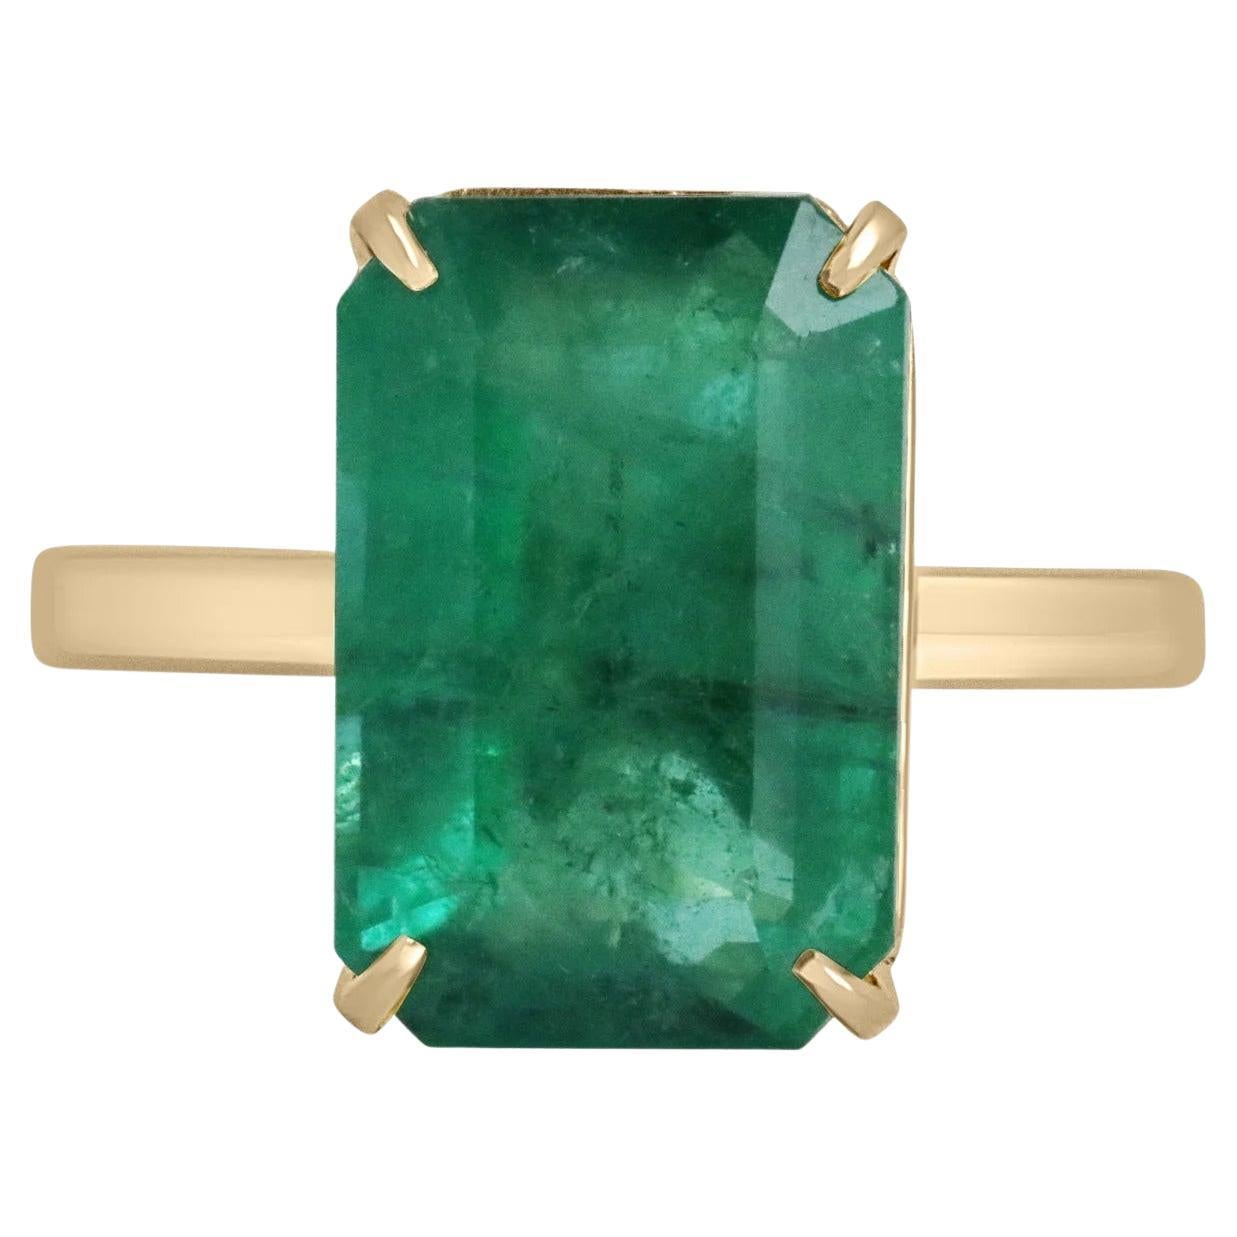 6.26 Carat Large Elongated Emerald Cut Emerald Solitaire Engagement Ring 14K